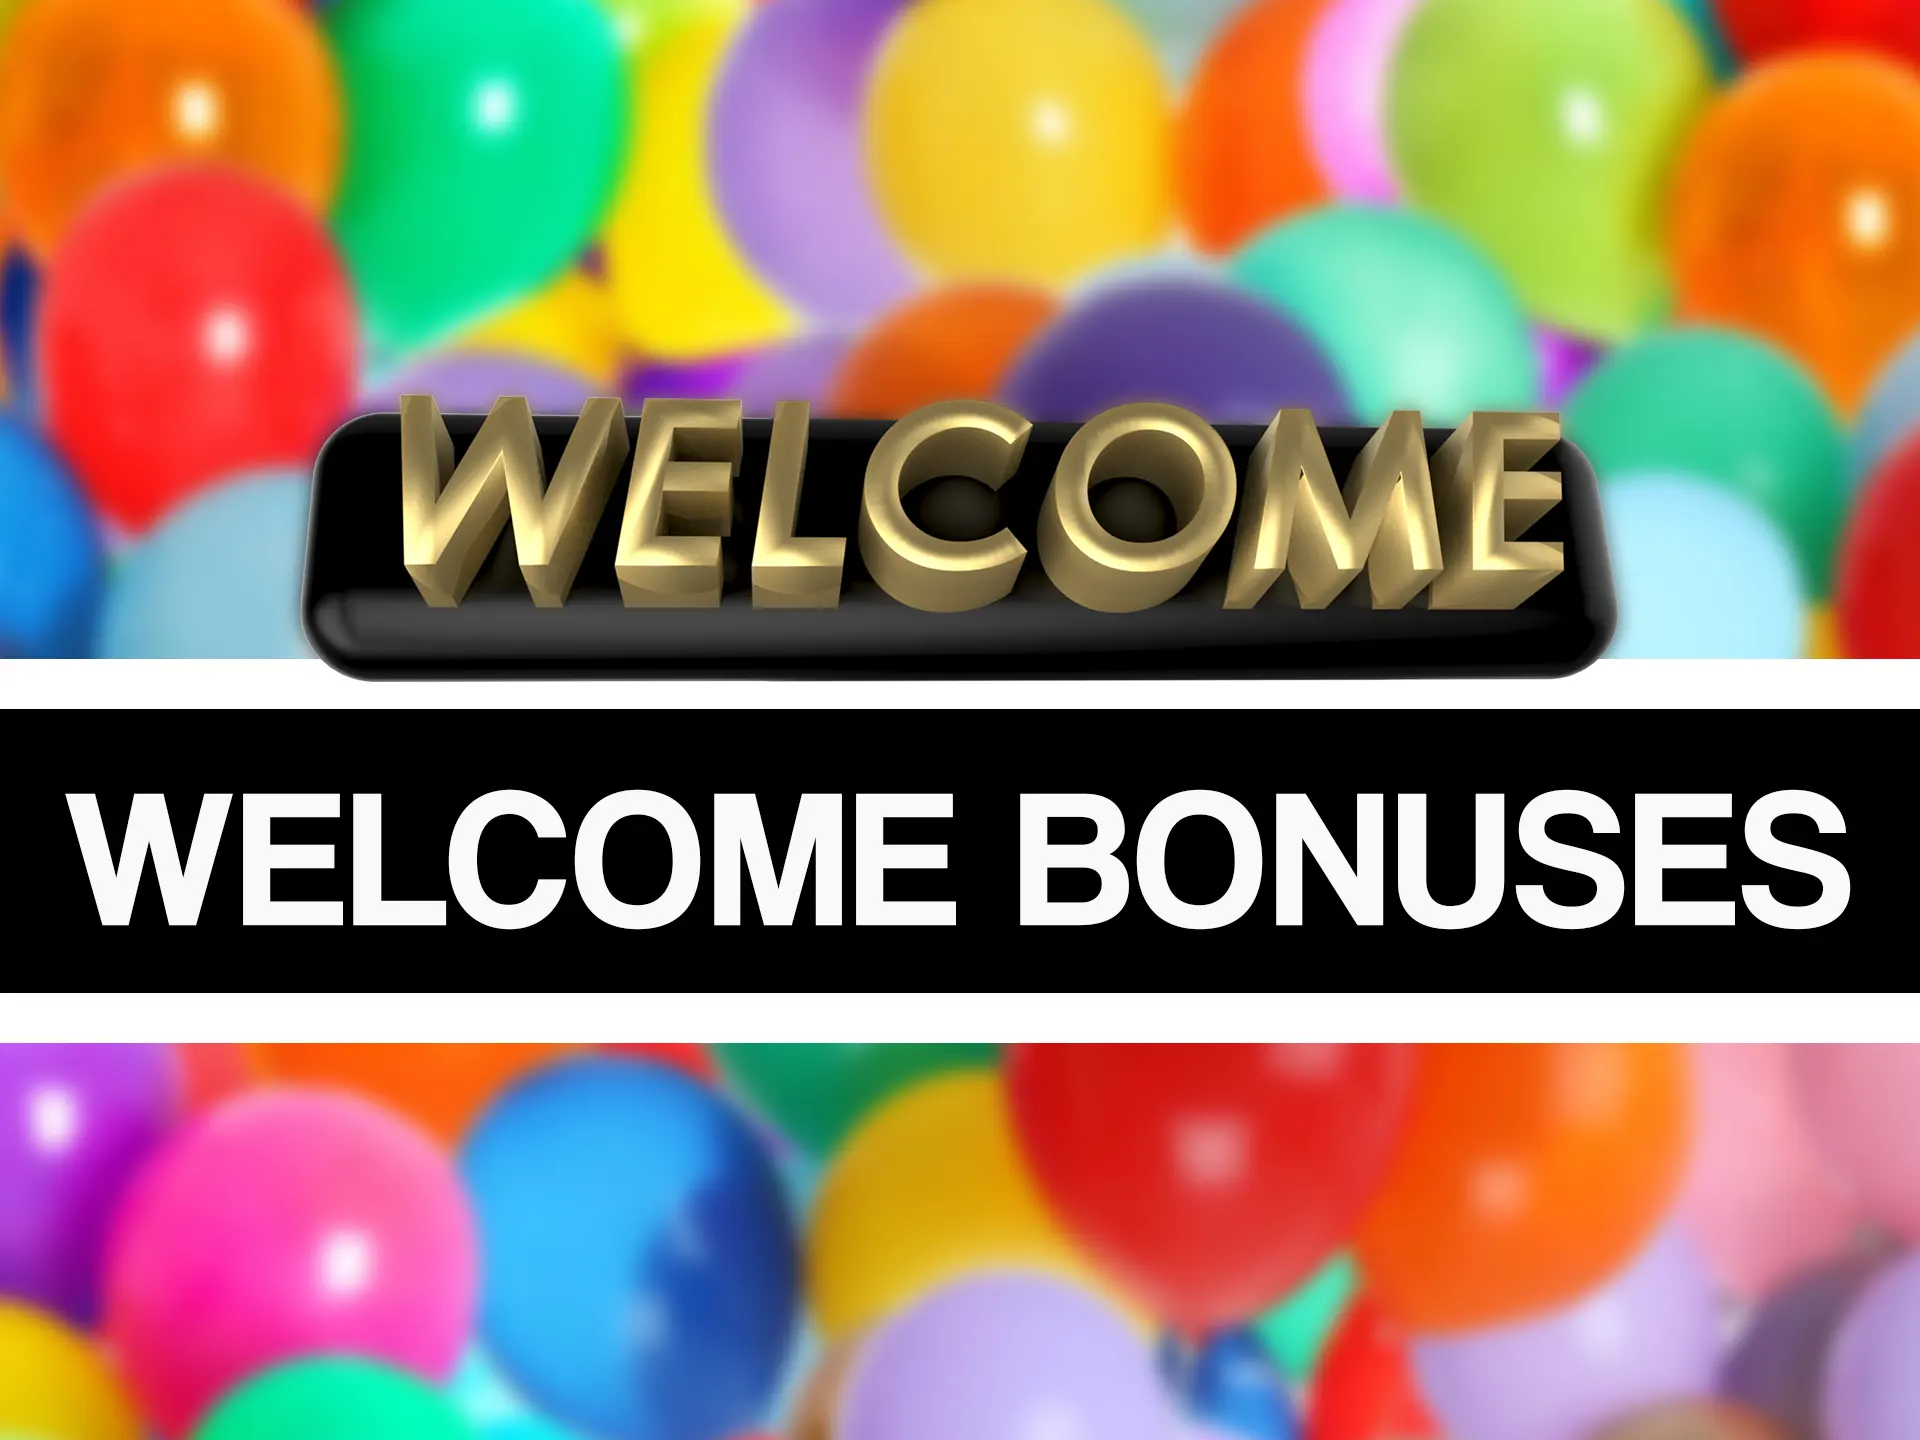 Get welcome bonus after registering new account in the app.